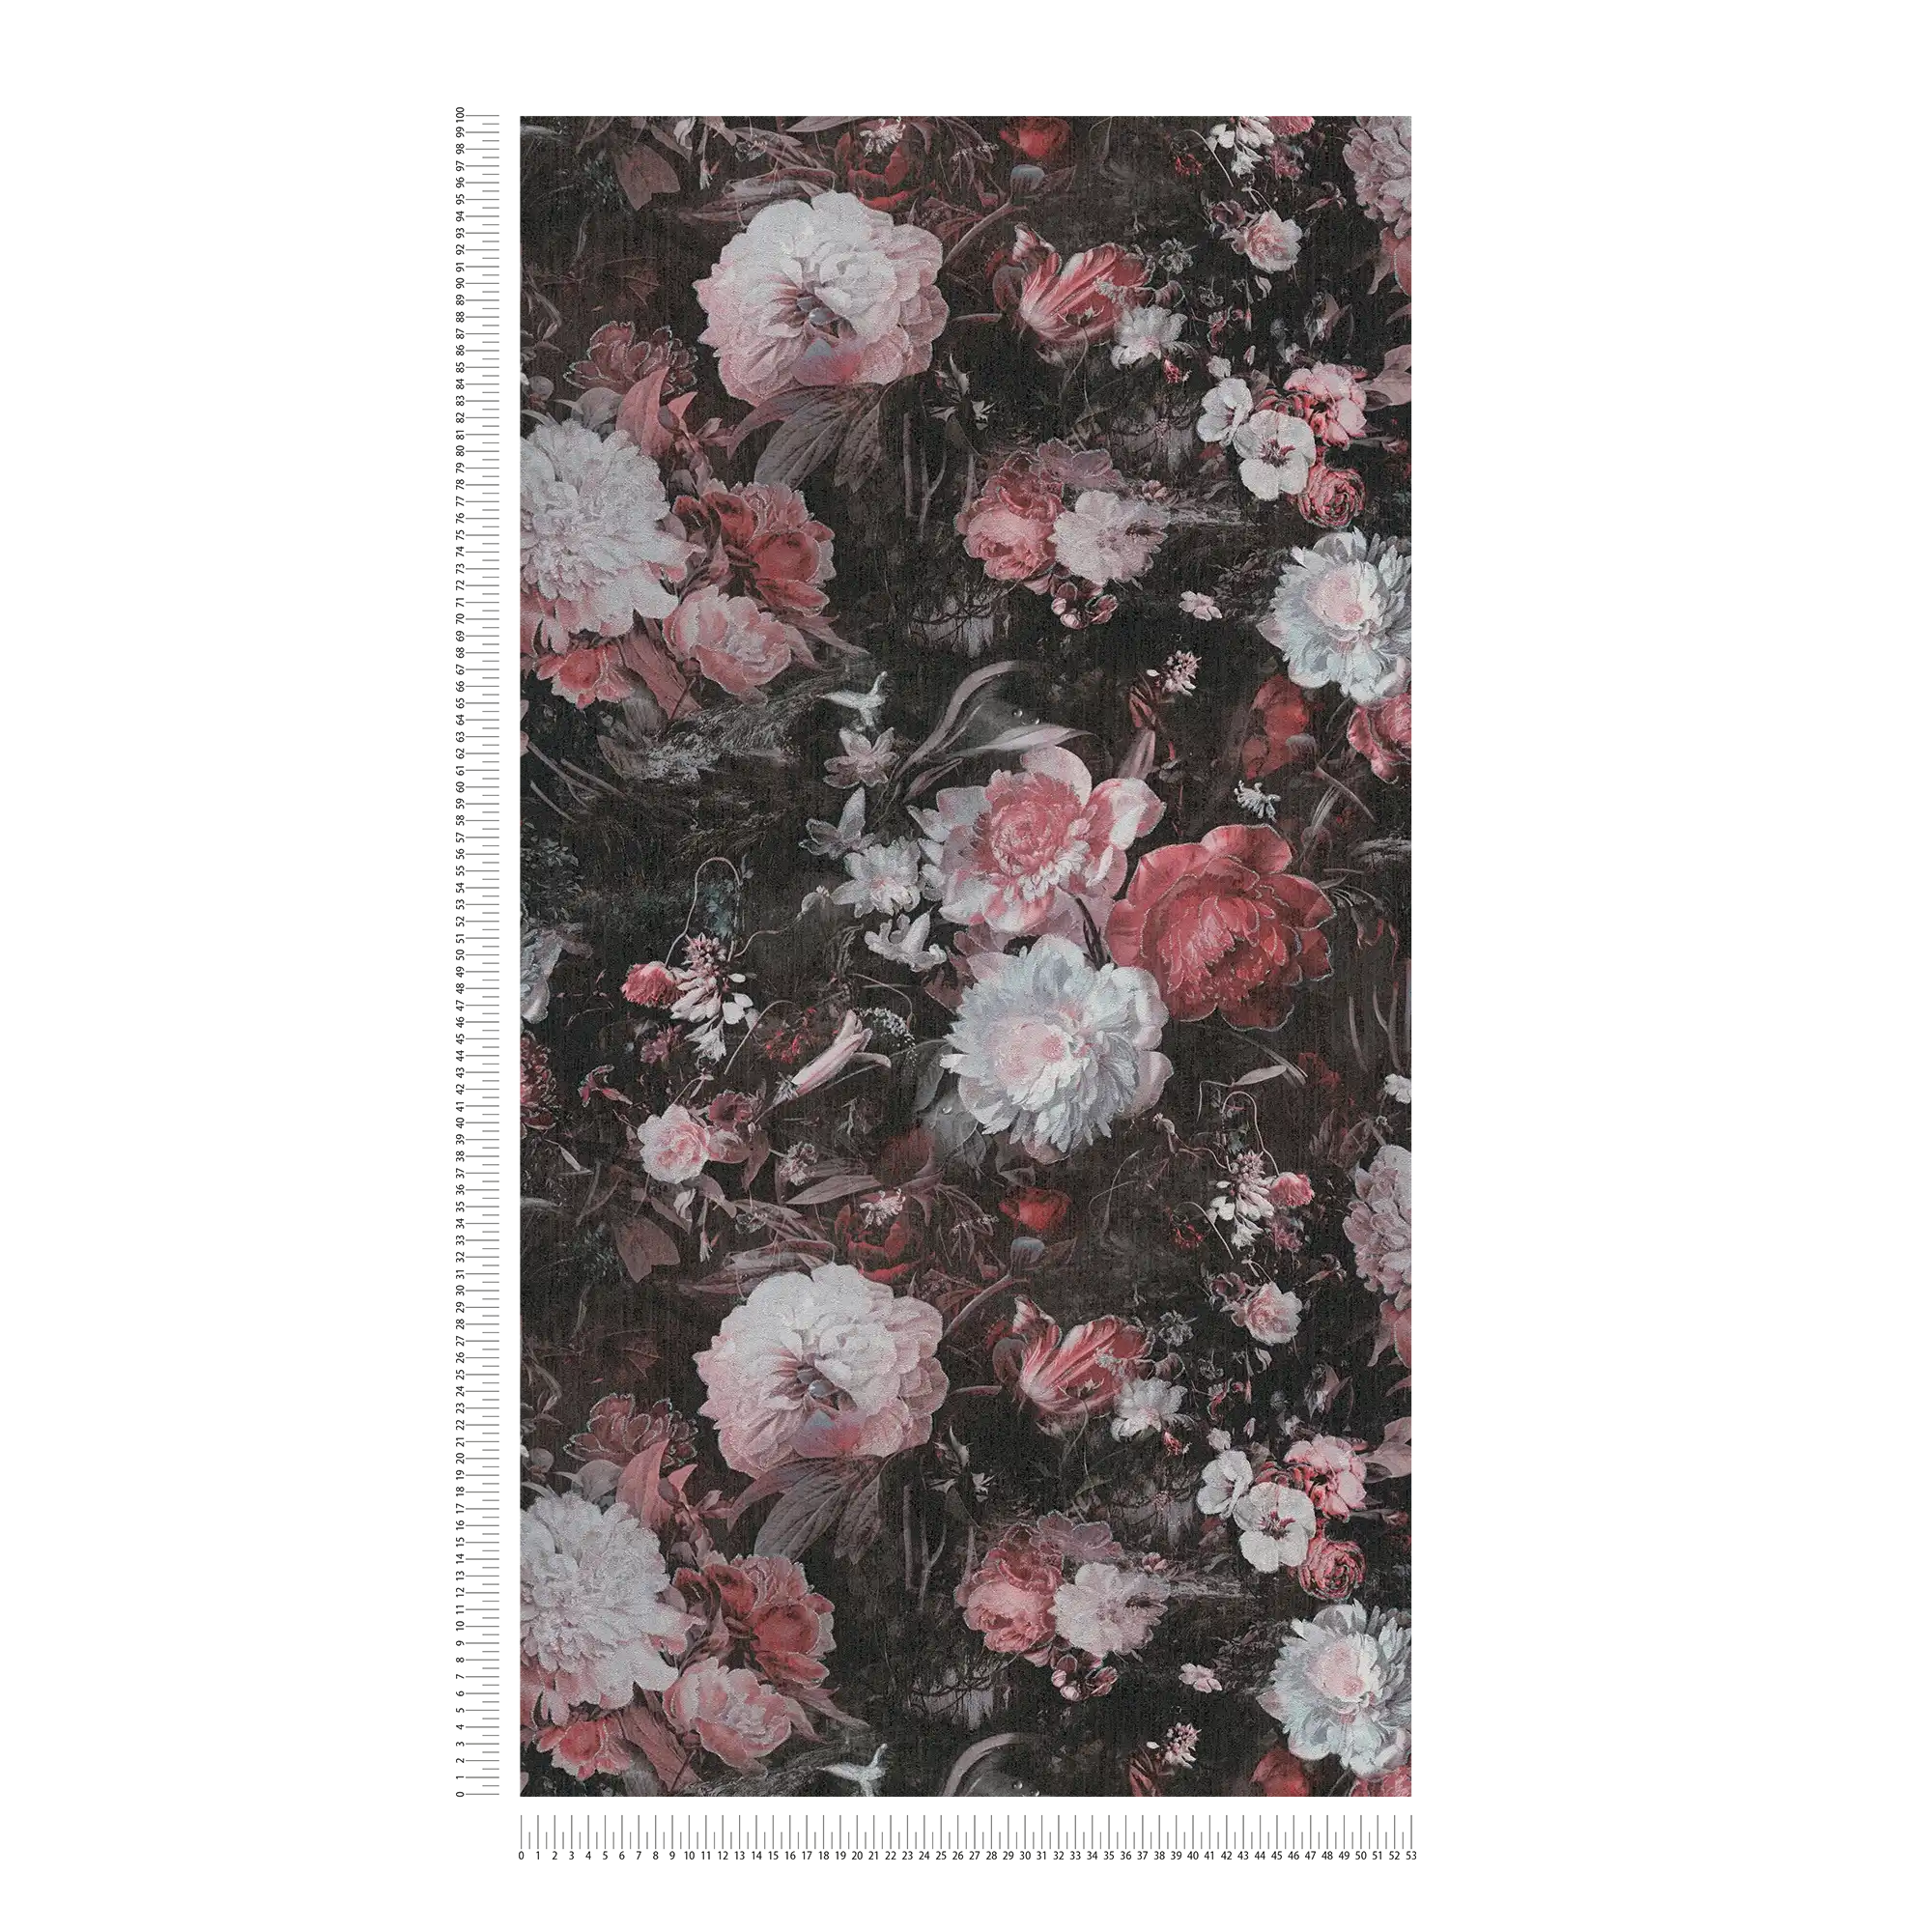             Vintage style roses wallpaper - metallic, black, white
        